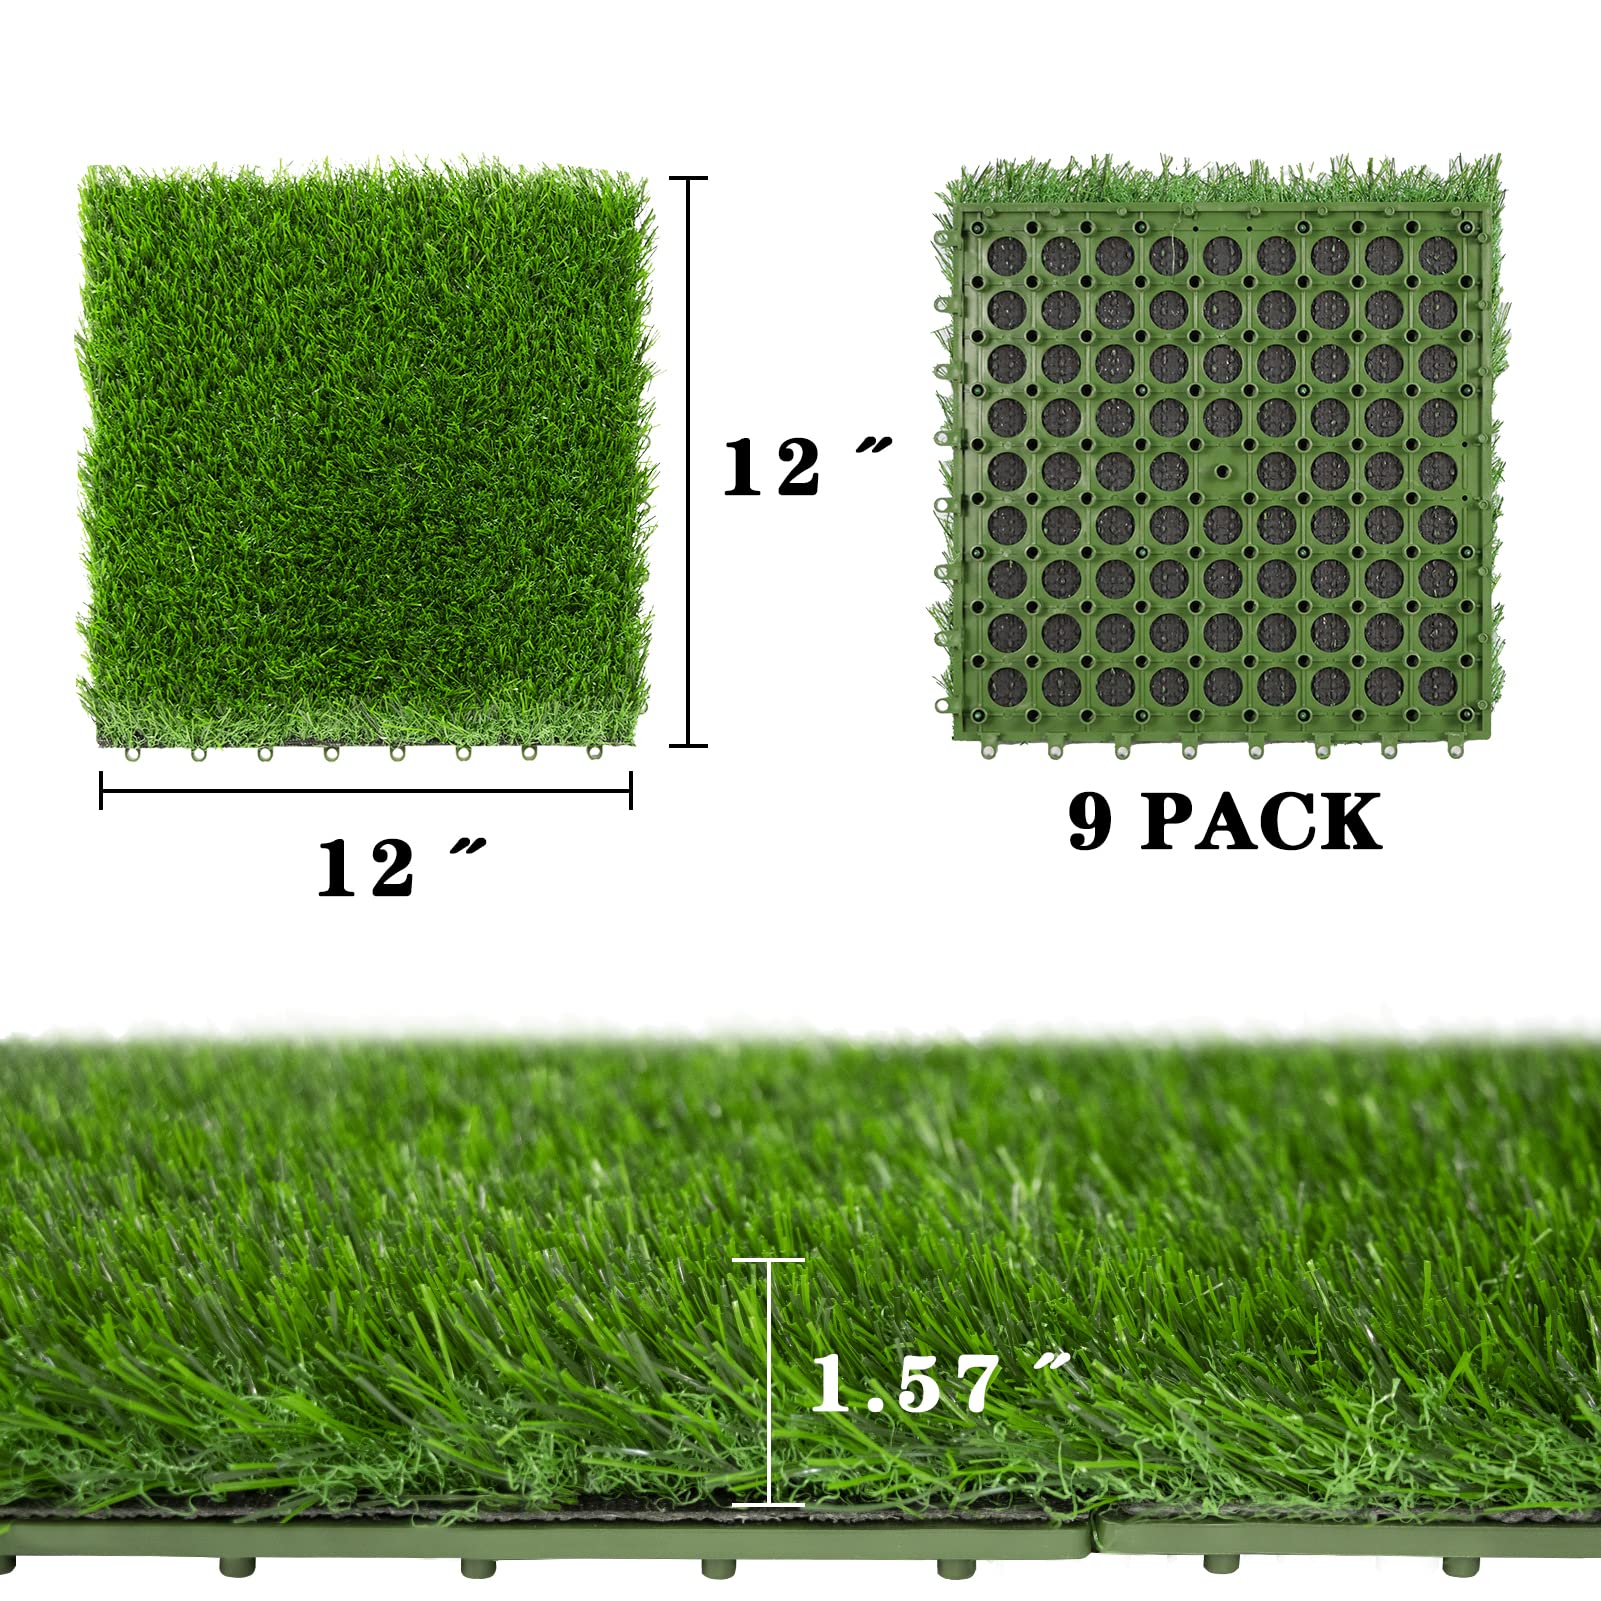 CJNLON 12"x12" Artificial Grass Tiles, 9 Packs Self-draining Fake Grass Turf Tiles Set for Flooring Decor, Dog Pads Indoor Outdoor 1.57'' in Pile Height